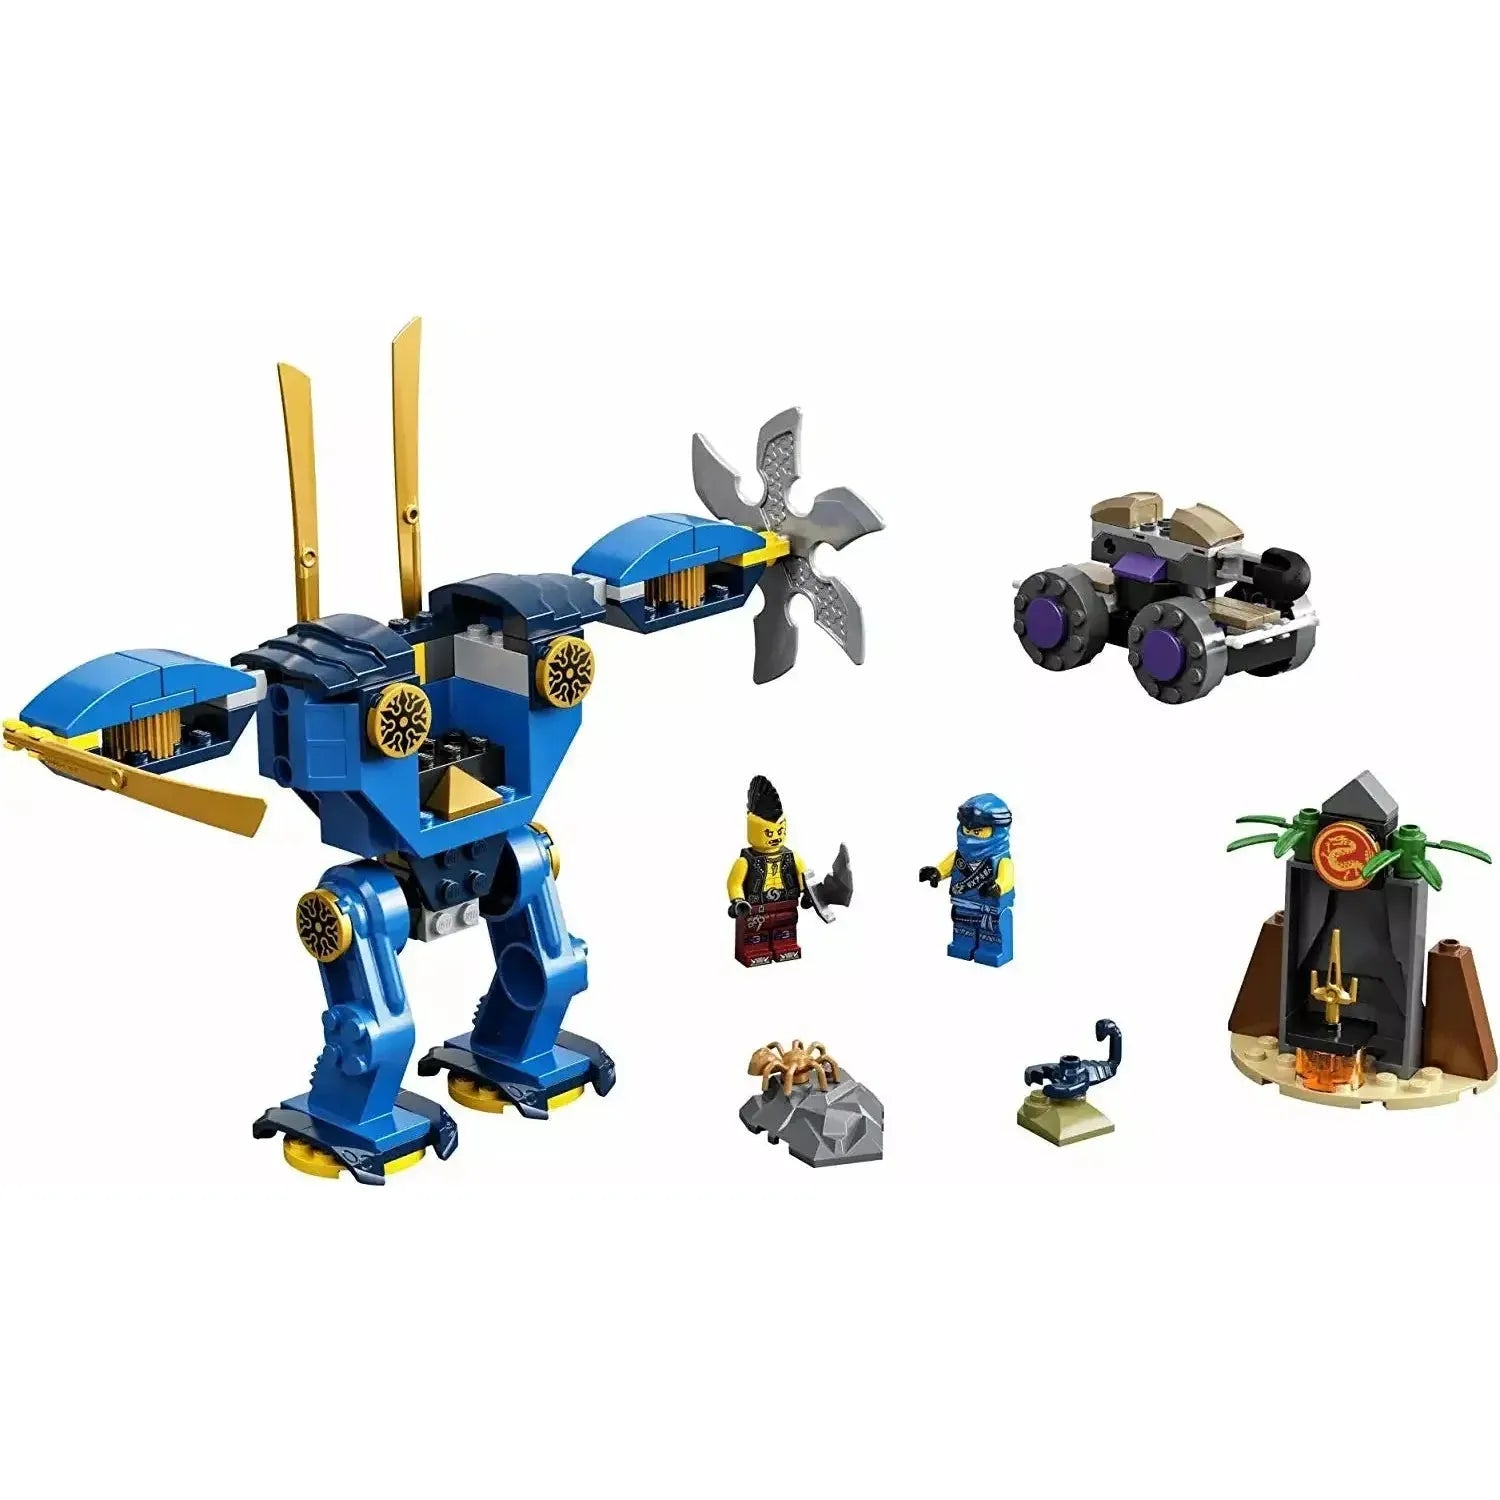 LEGO NINJAGO 71740 Legacy Jay’s Electro Mech Ninja Toy Building Kit Featuring Collectible Minifigures 106 Pieces - BumbleToys - 4+ Years, 5-7 Years, Boys, LEGO, Ninjago, OXE, Pre-Order